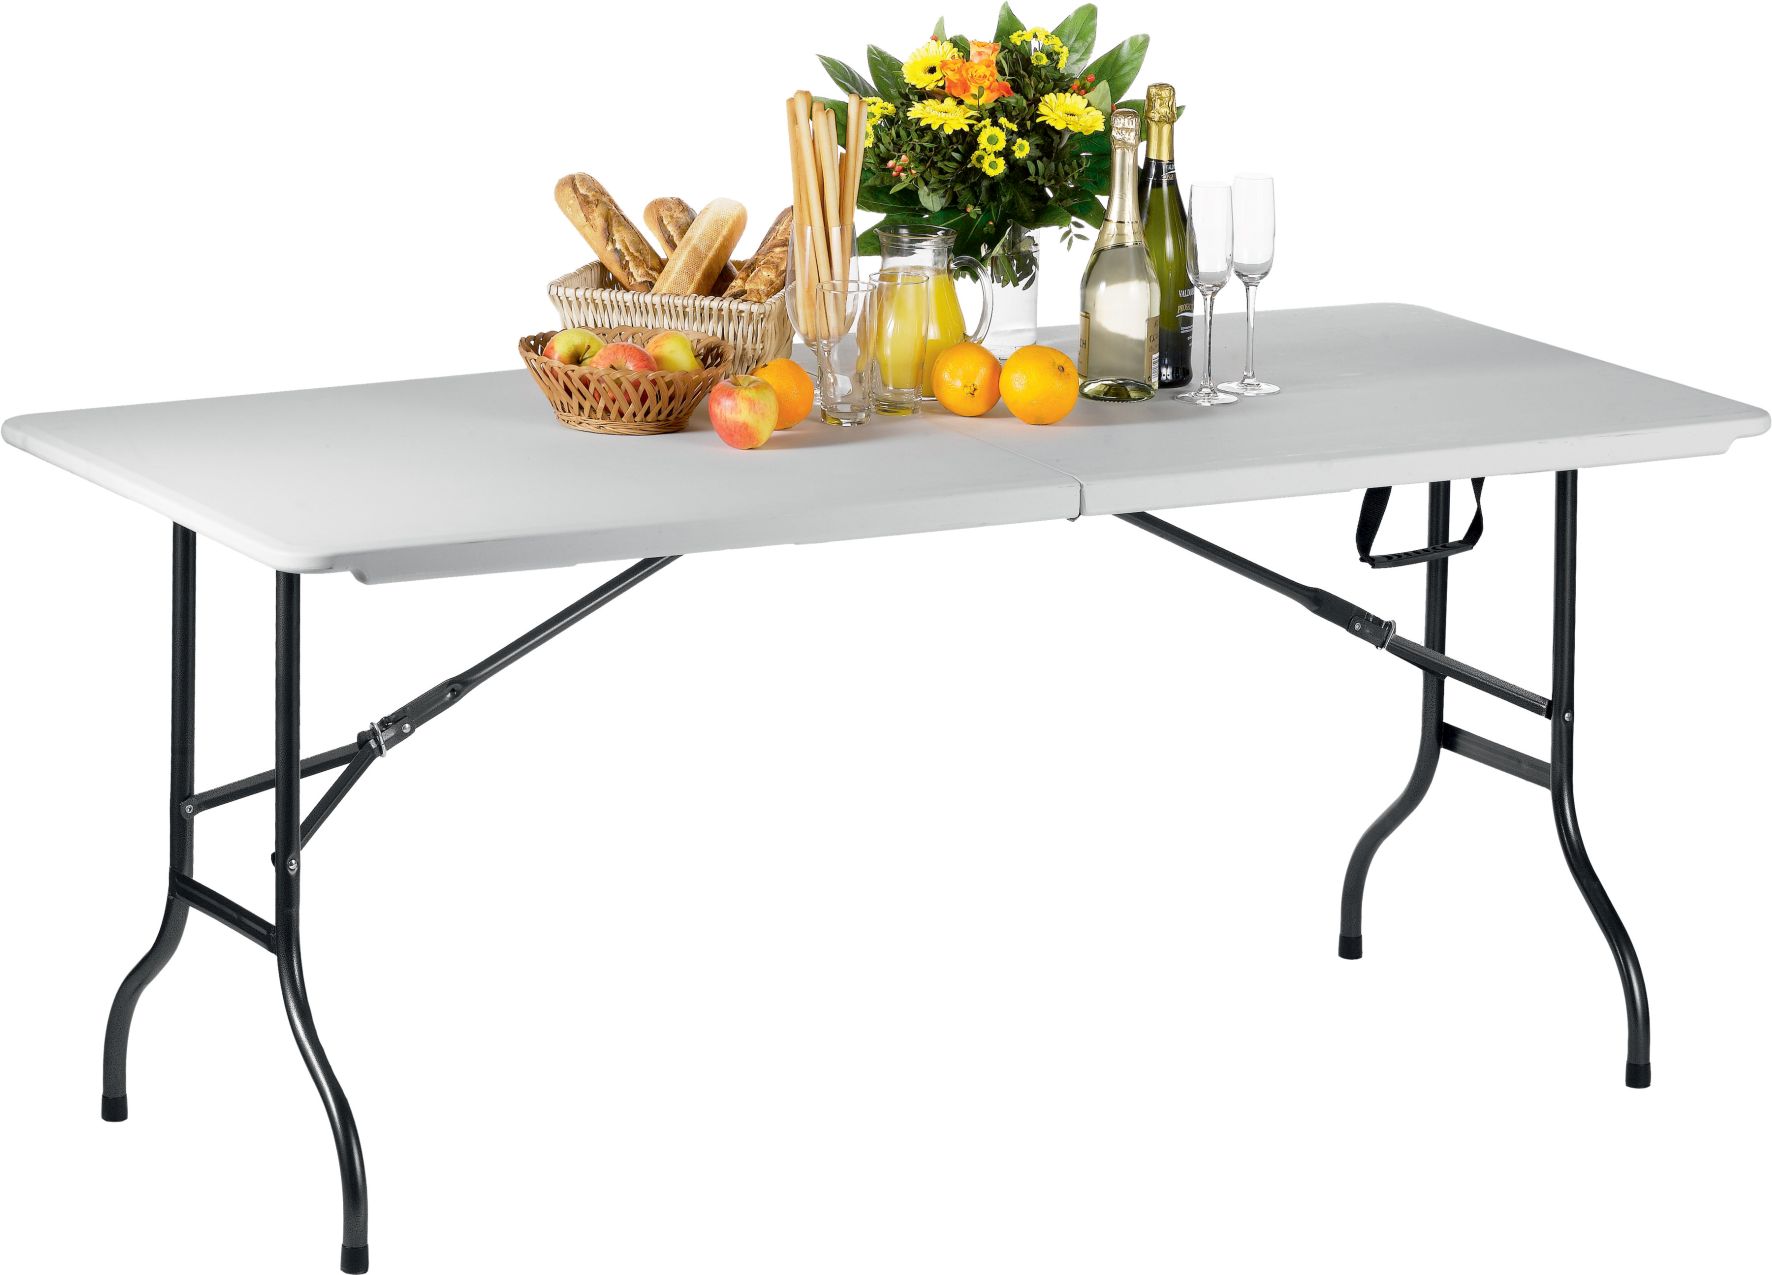 Table pliante - Blanche - 183x76x(h)72cm